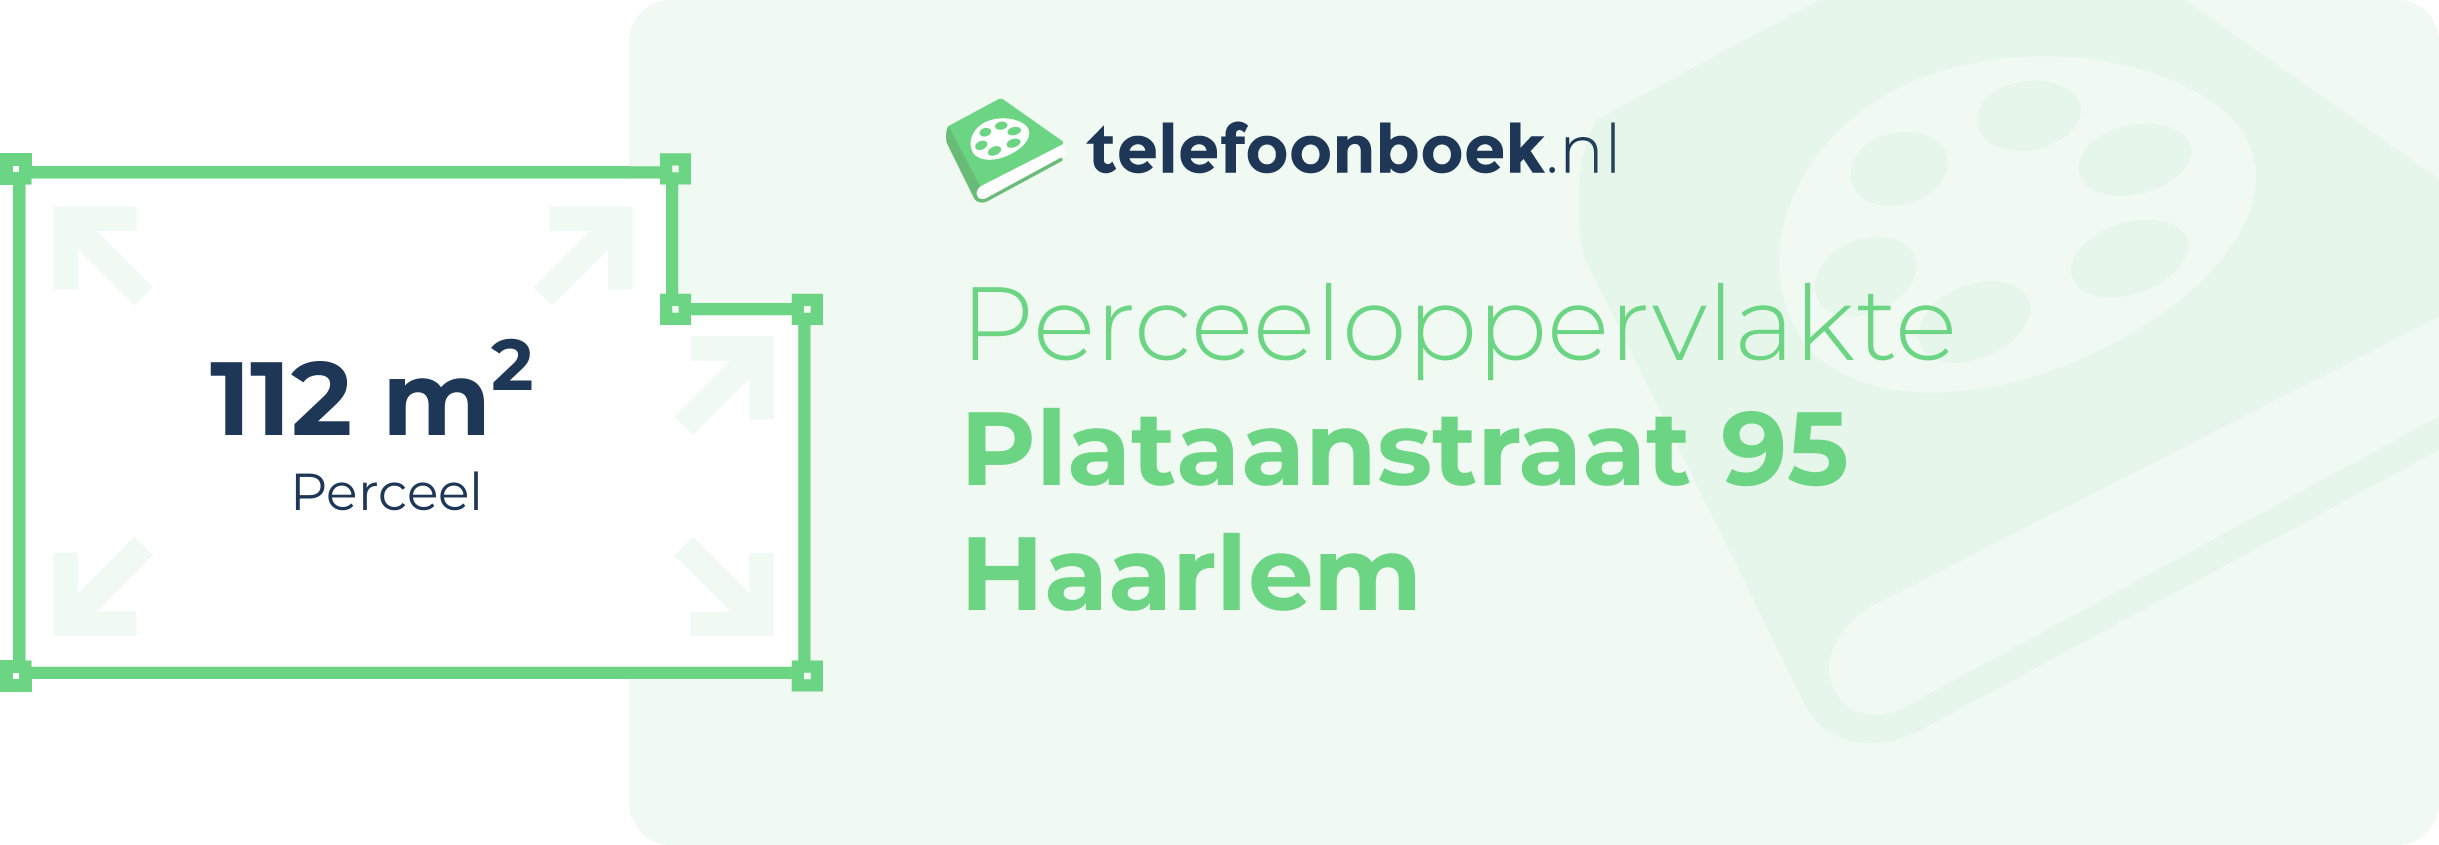 Perceeloppervlakte Plataanstraat 95 Haarlem